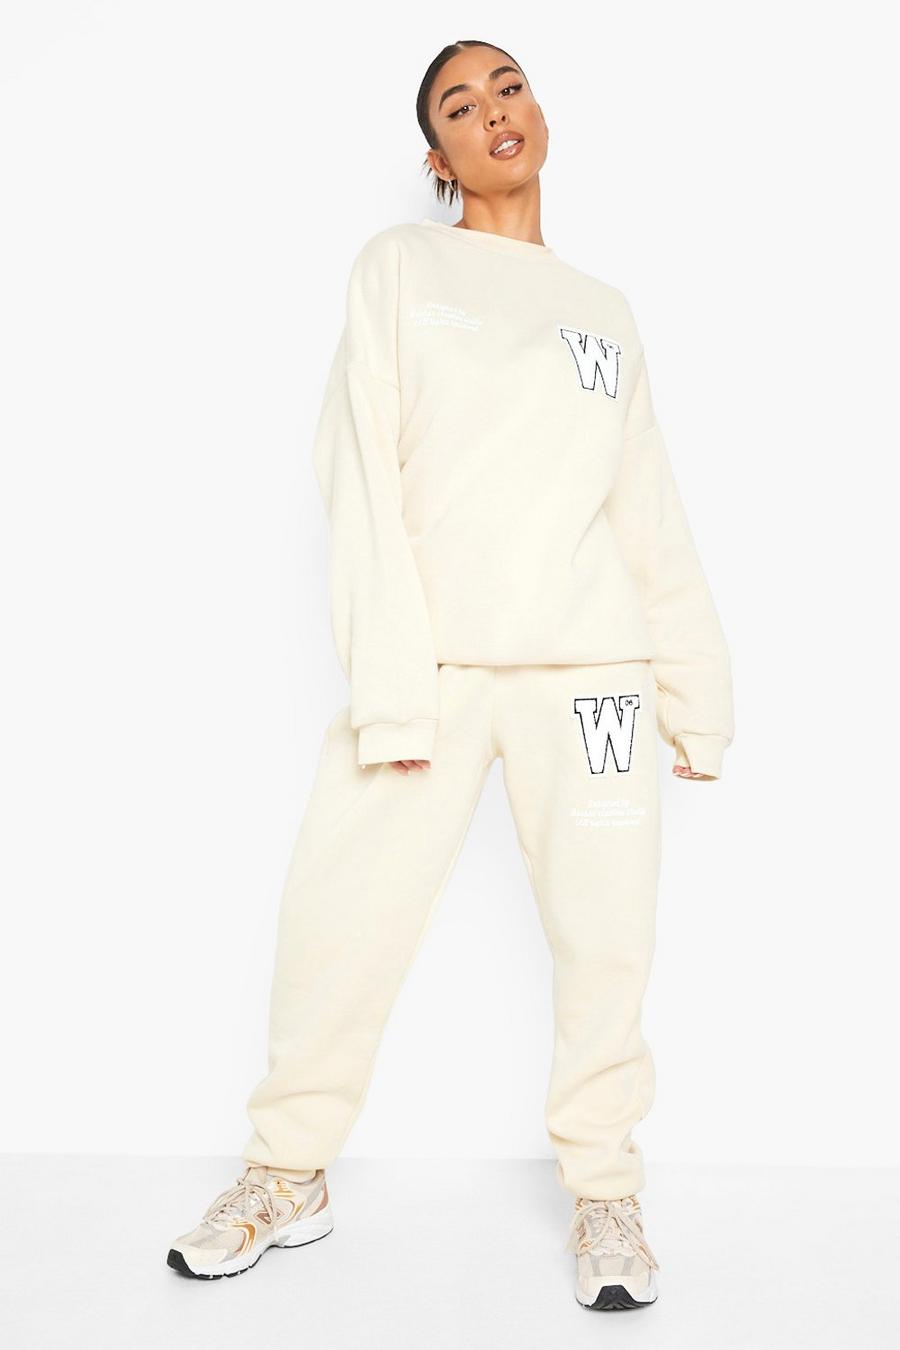 Pullover-Trainingsanzug aus Frottee mit W-Applikation, Sand